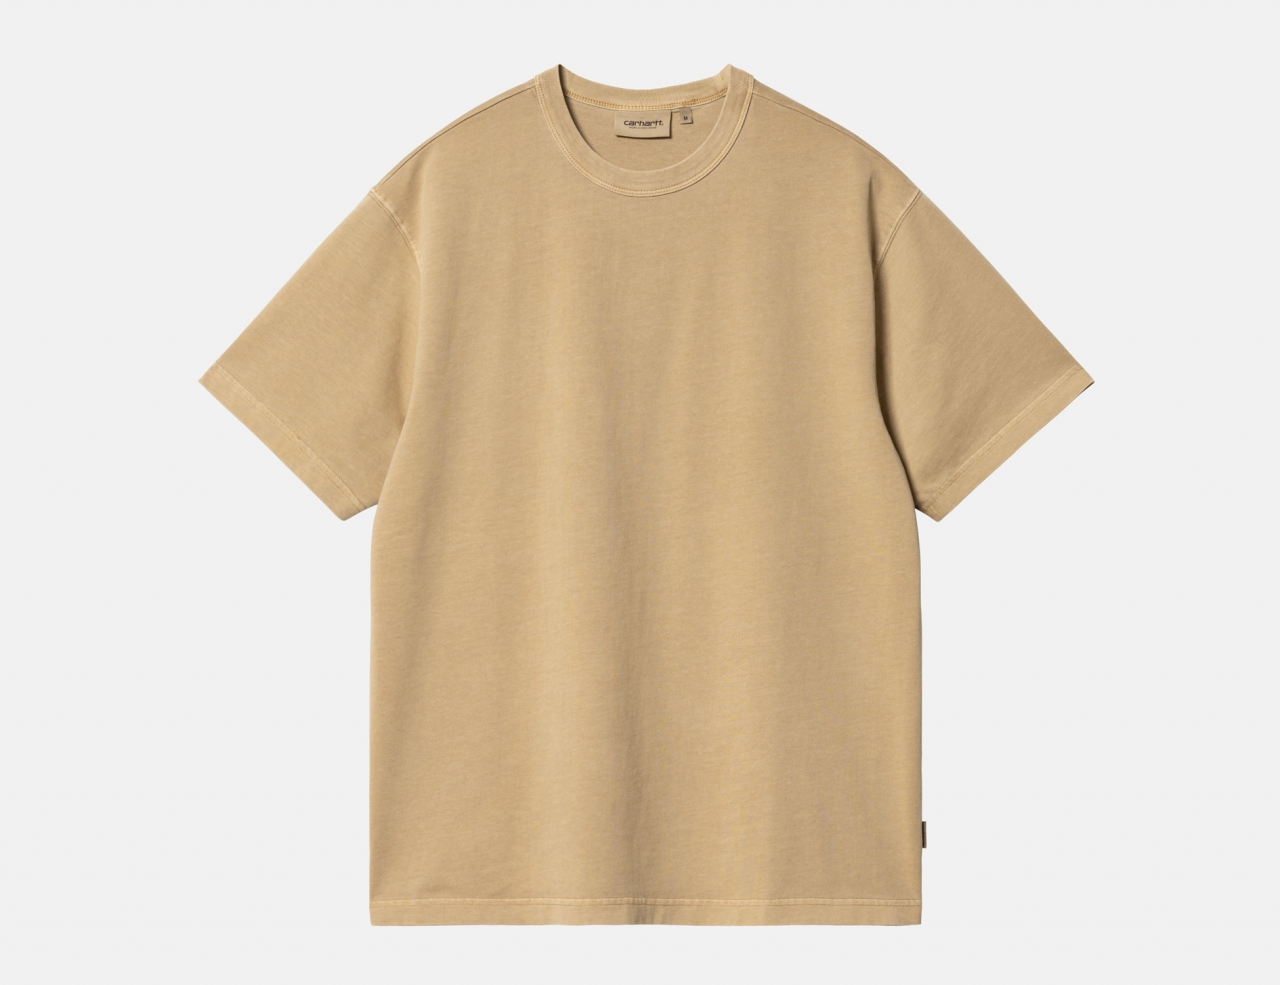 Carhartt WIP S/S Taos T-Shirt - Sable garment dyed